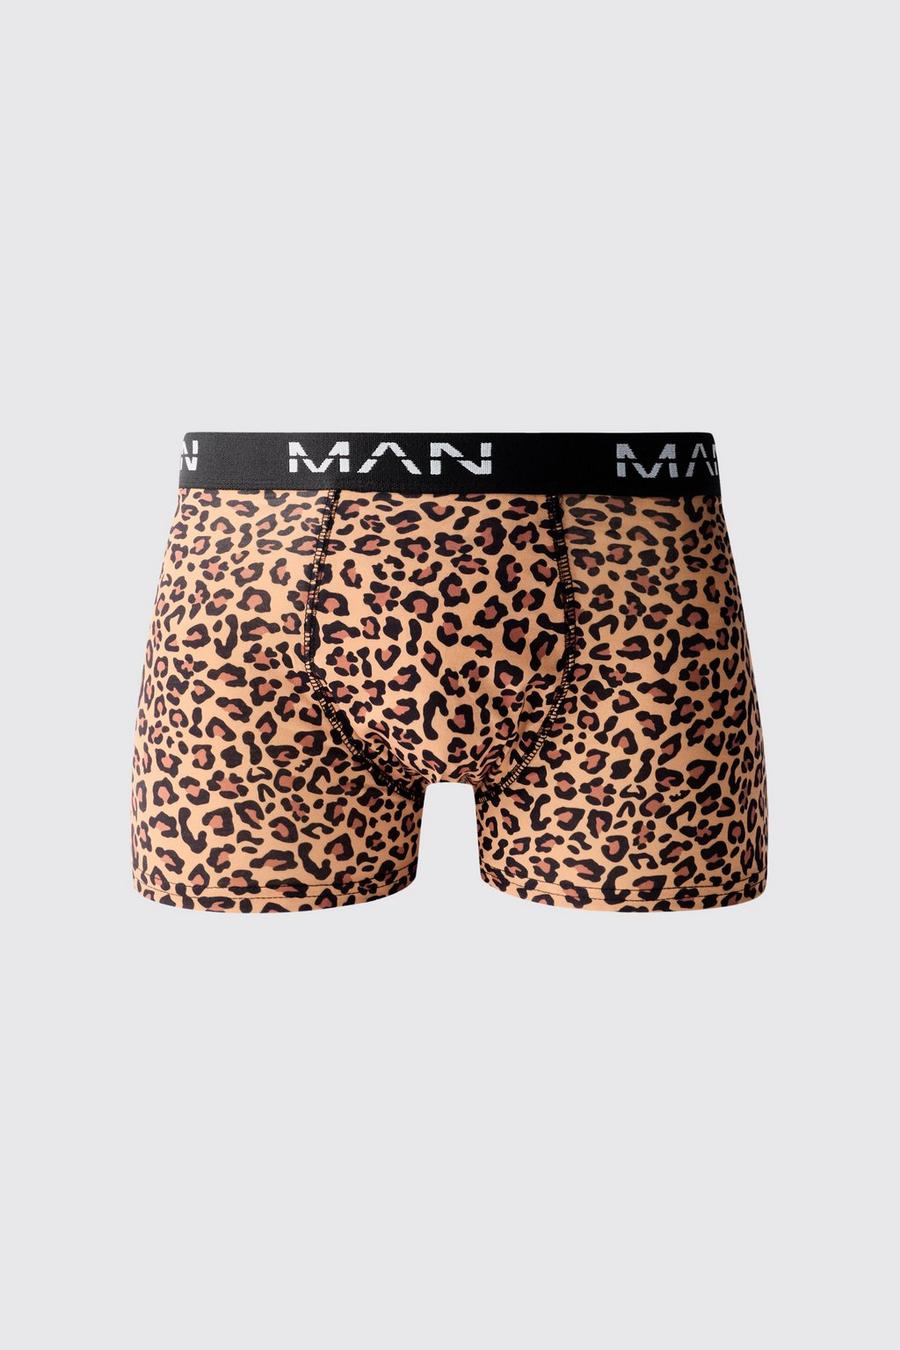 Multi Man Leopard Printed Boxers image number 1